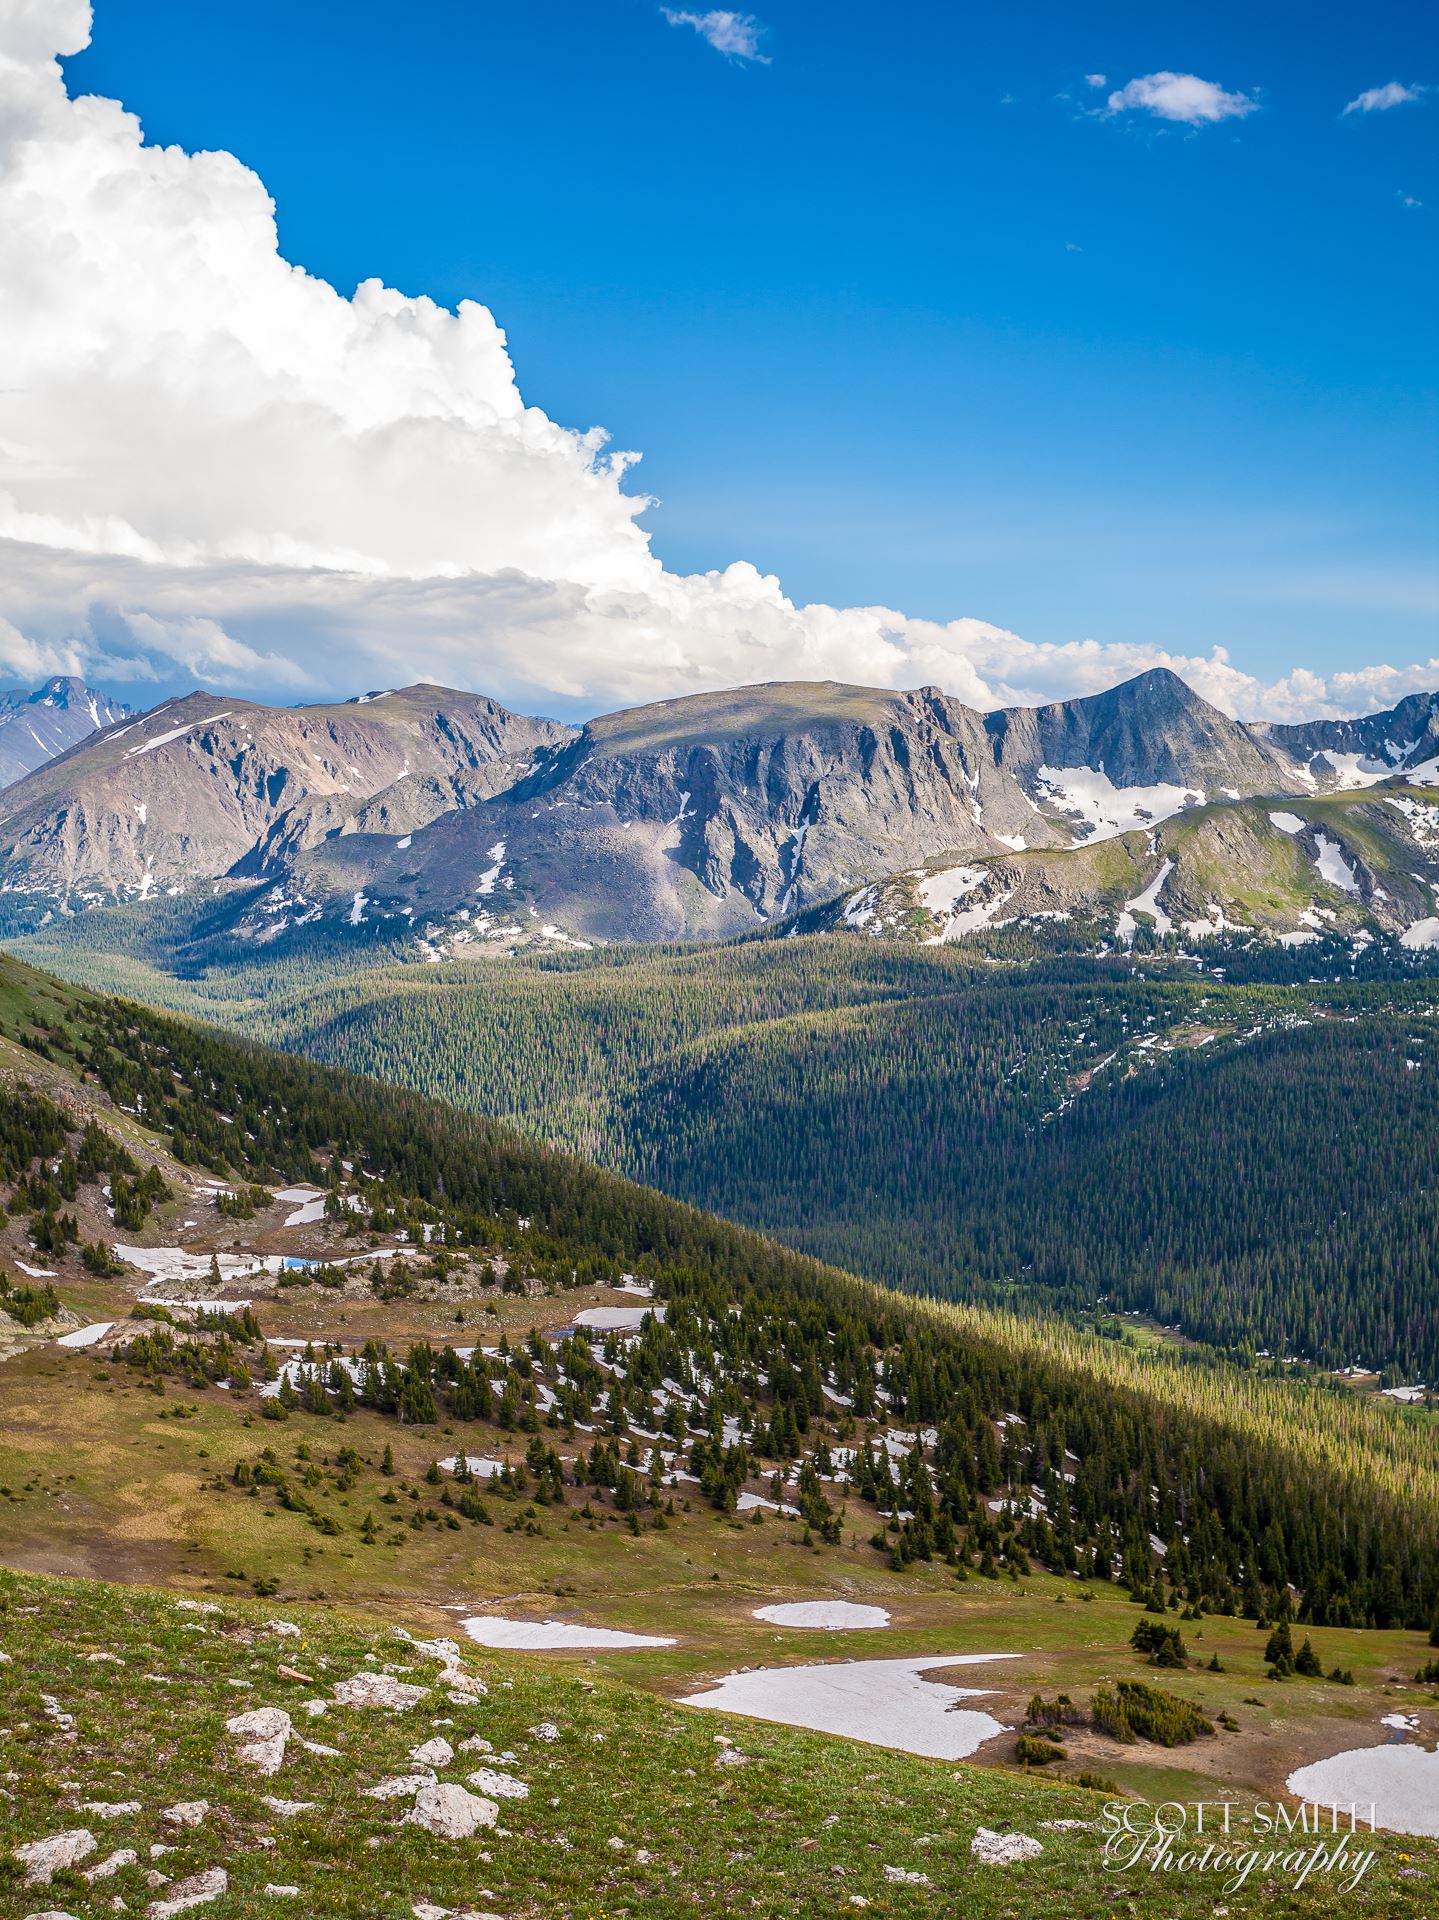 Rocky Mountain National Park 1  by Scott Smith Photos